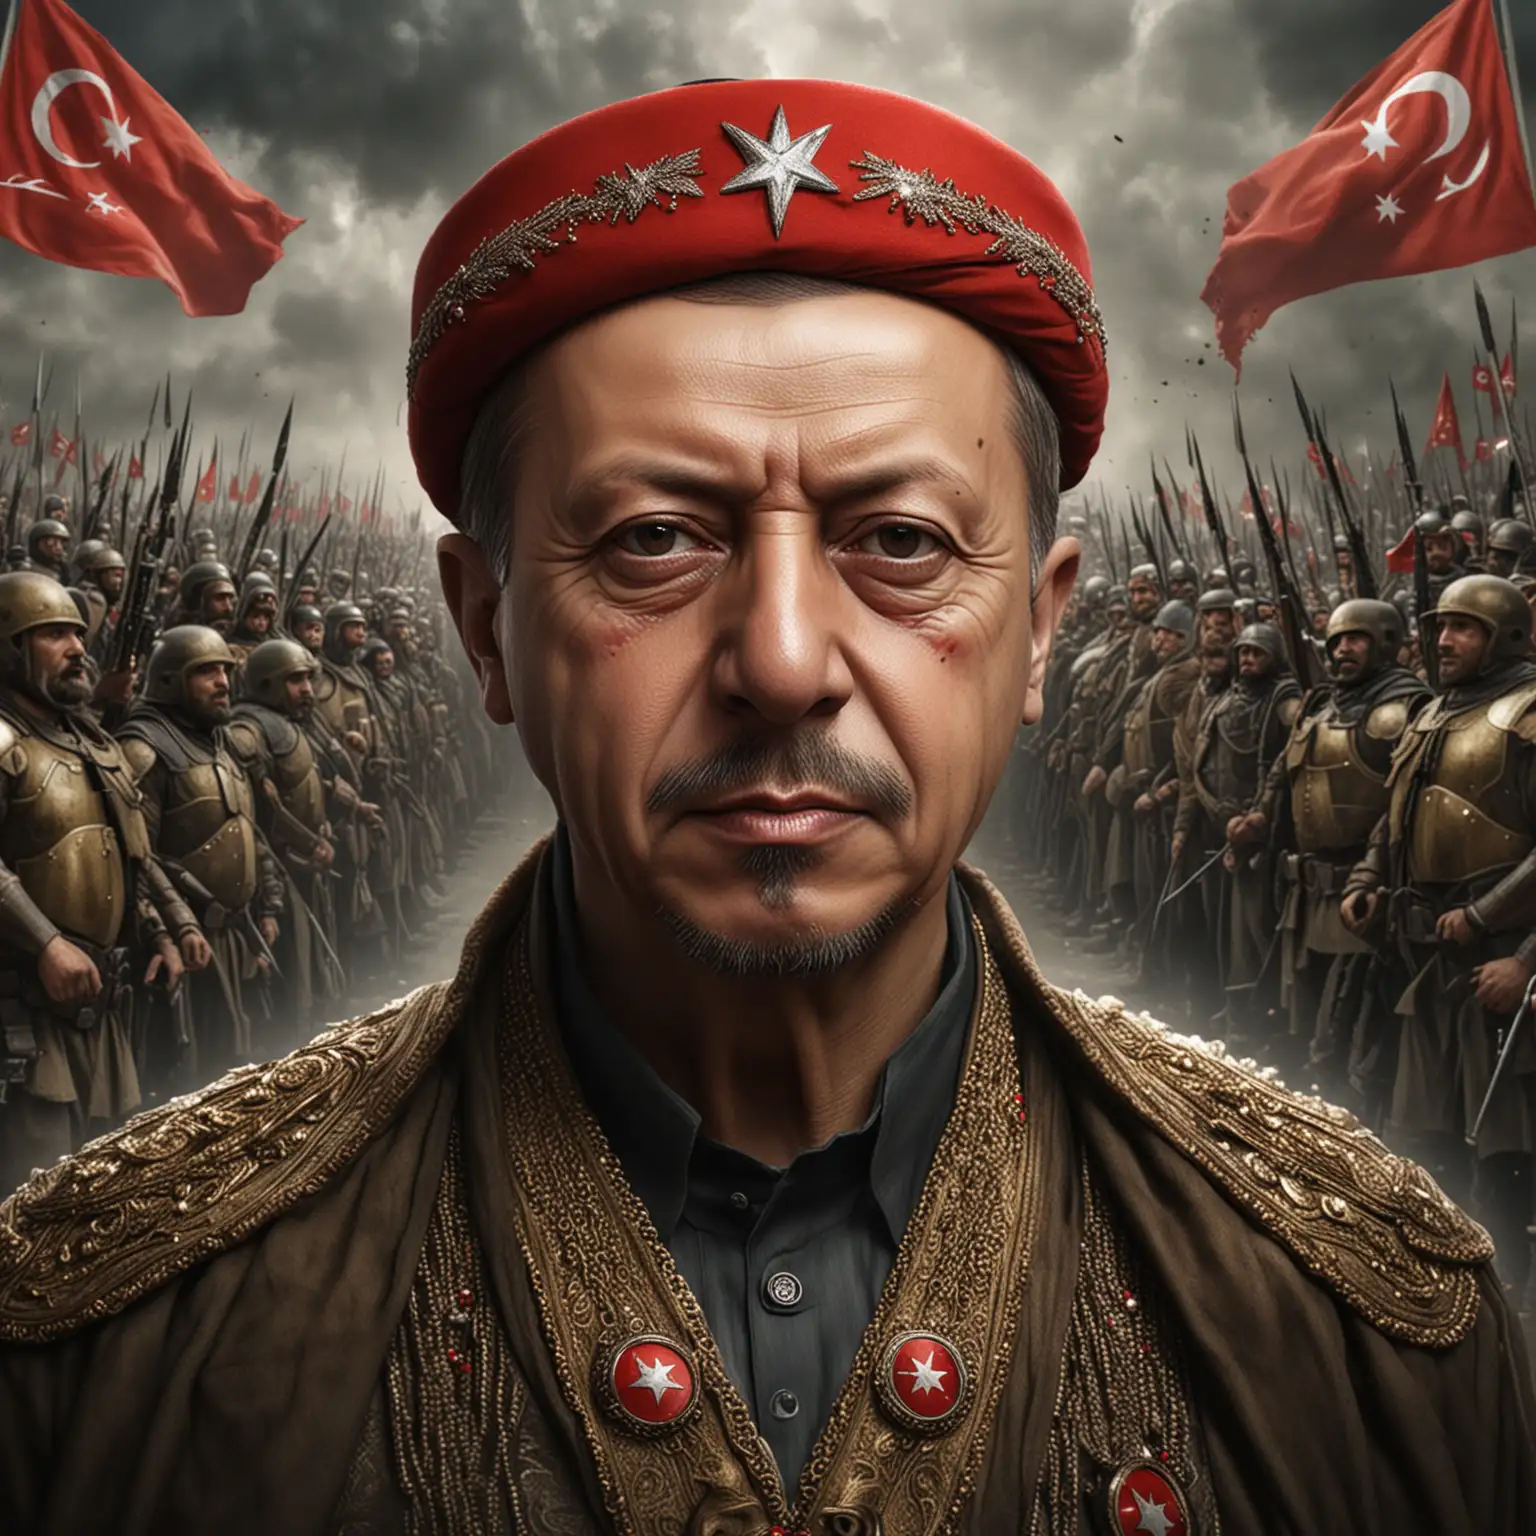 erdogan vilian or hero